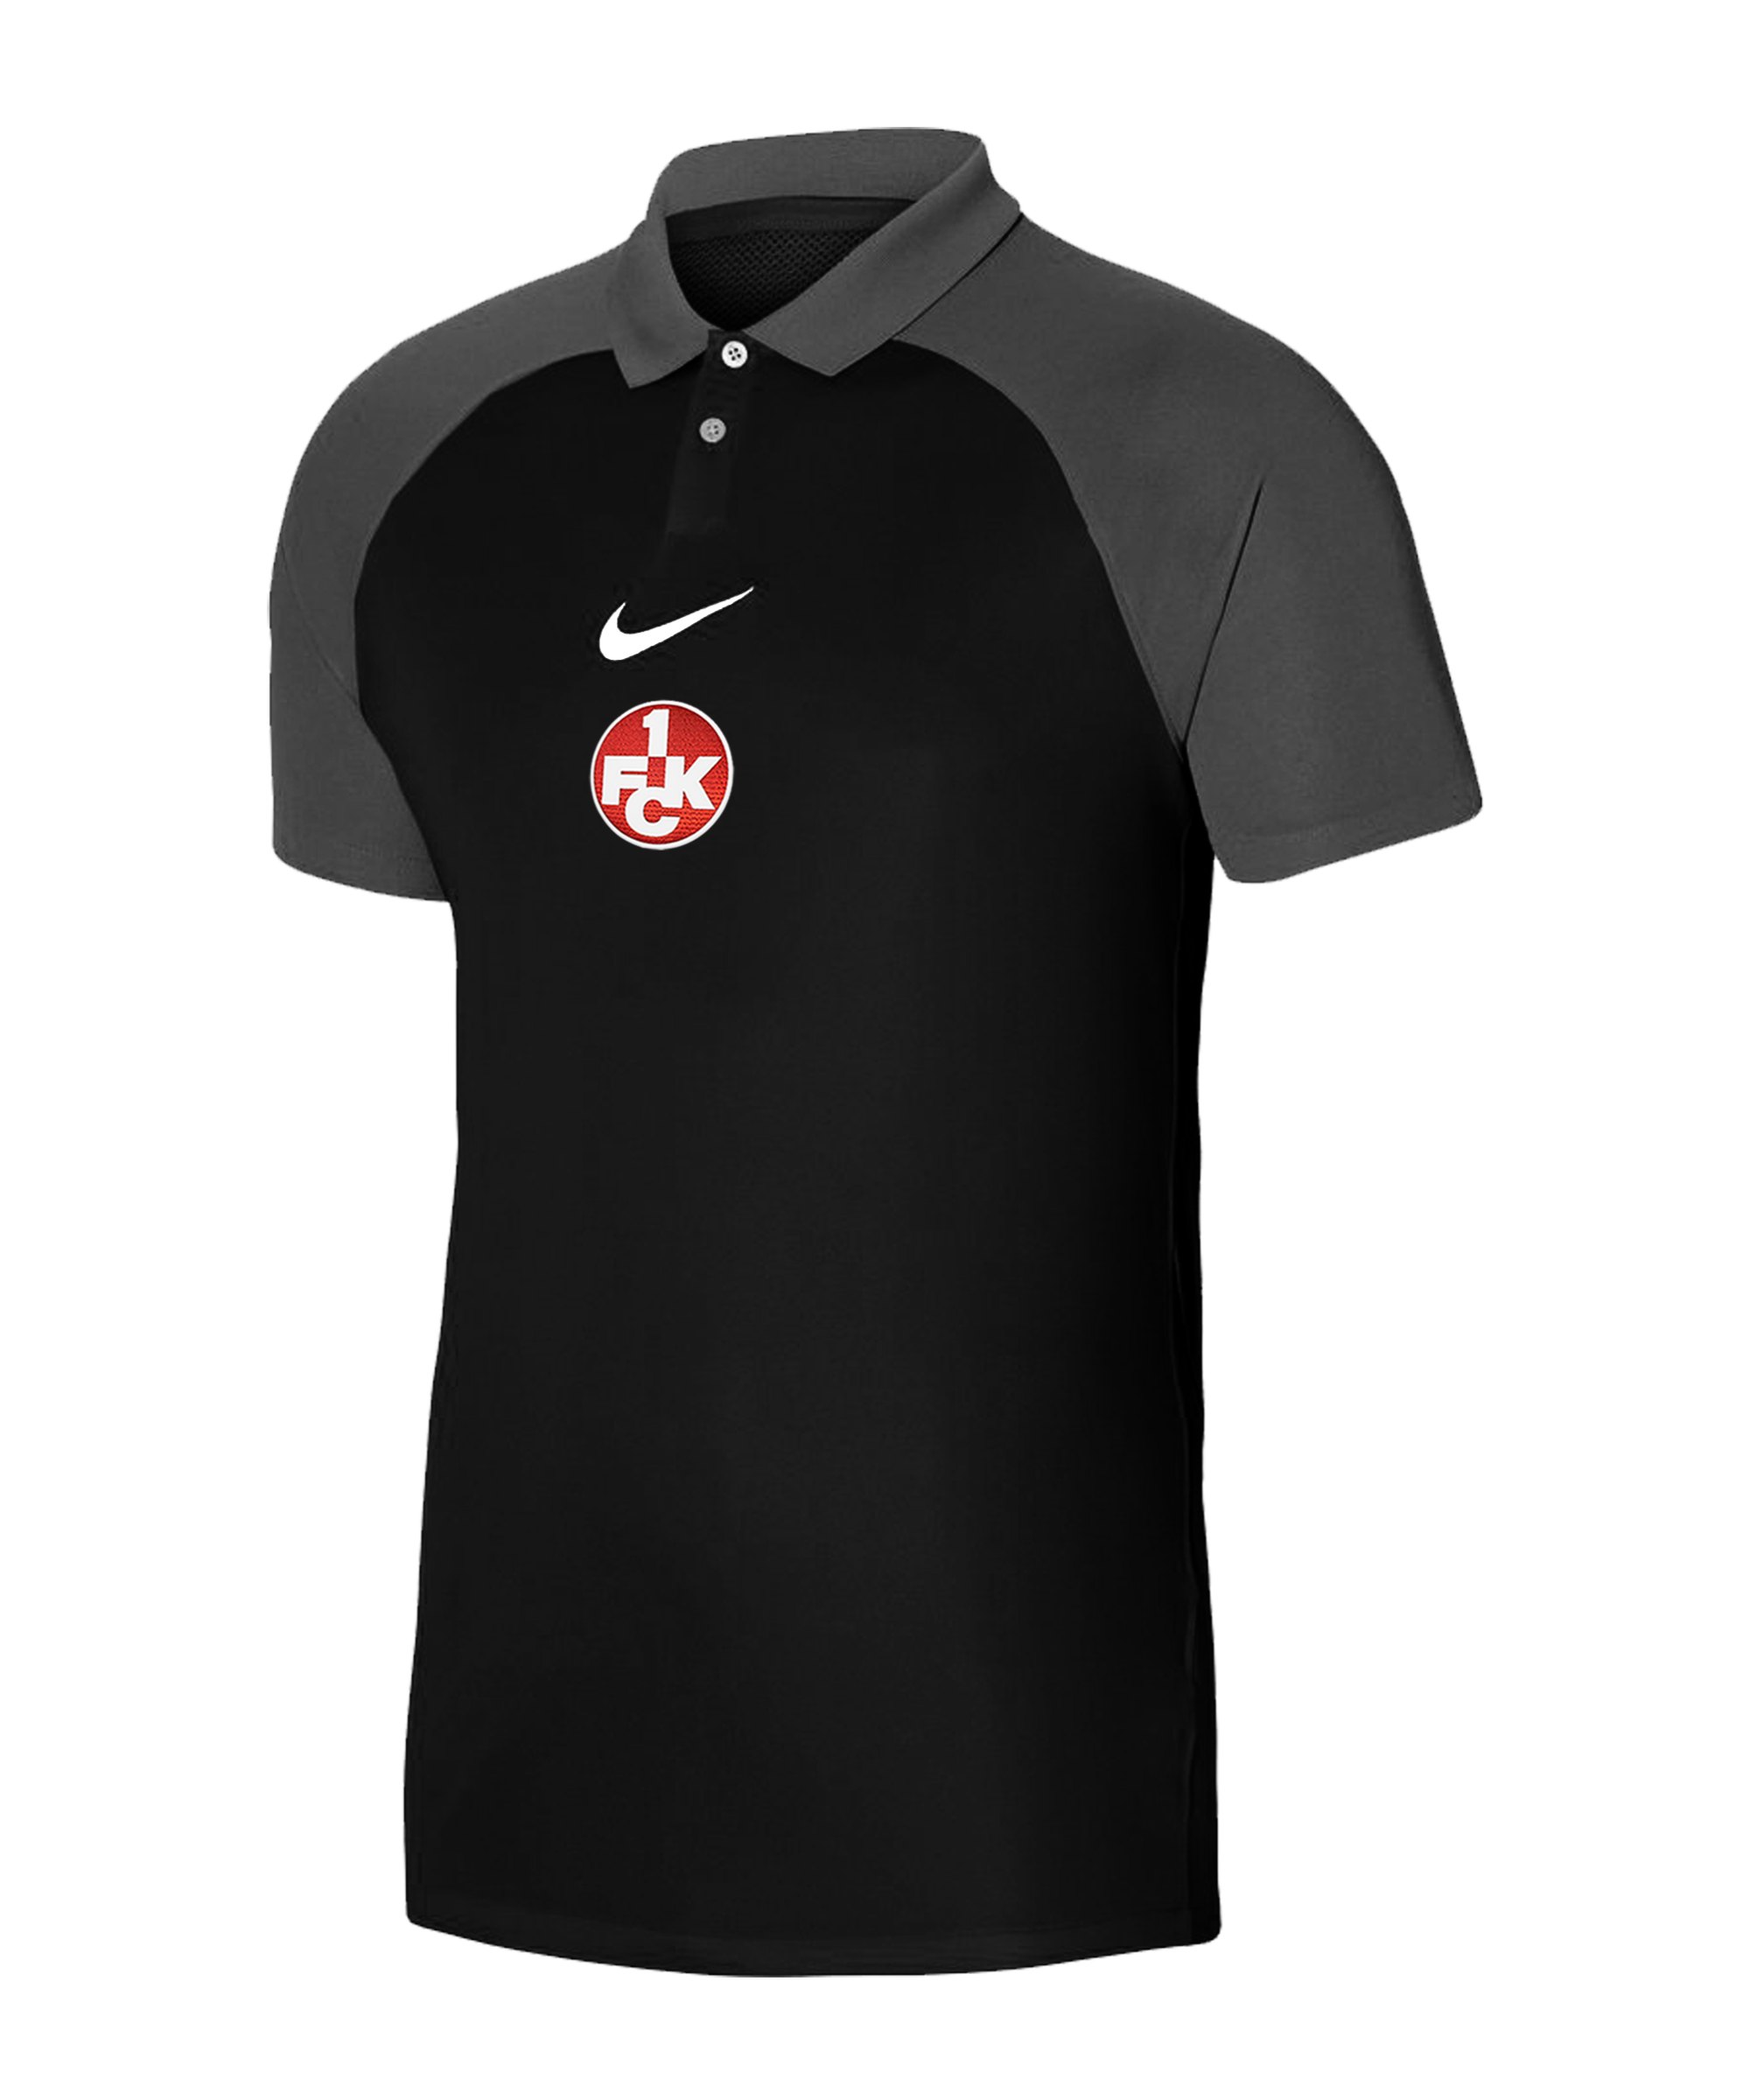 Nike 1. FC Kaiserslautern Poloshirt Schwarz F011 - schwarz